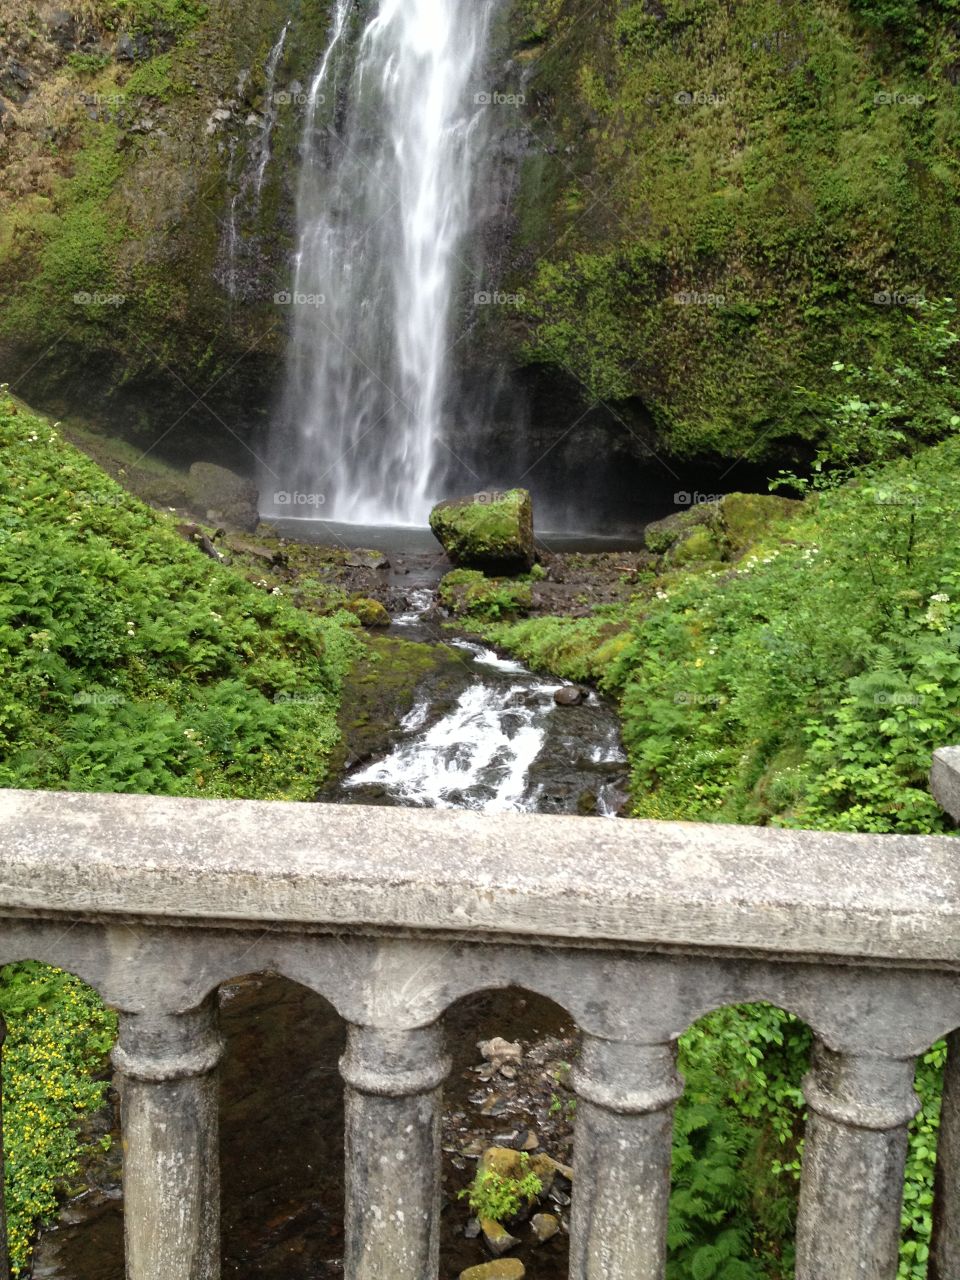 Multnomah Falls. On the way to the Oregon coast.